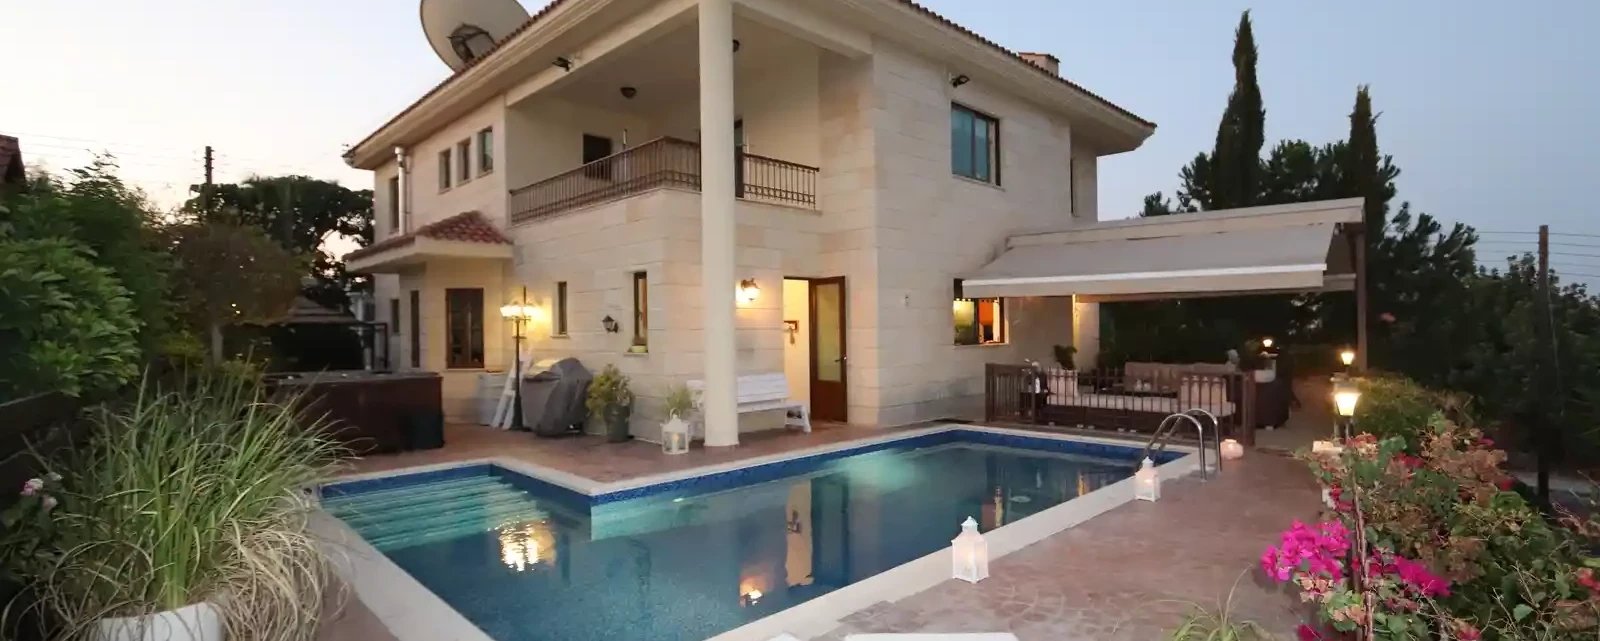 4-bedroom villa fоr sаle €1.500.000, image 1